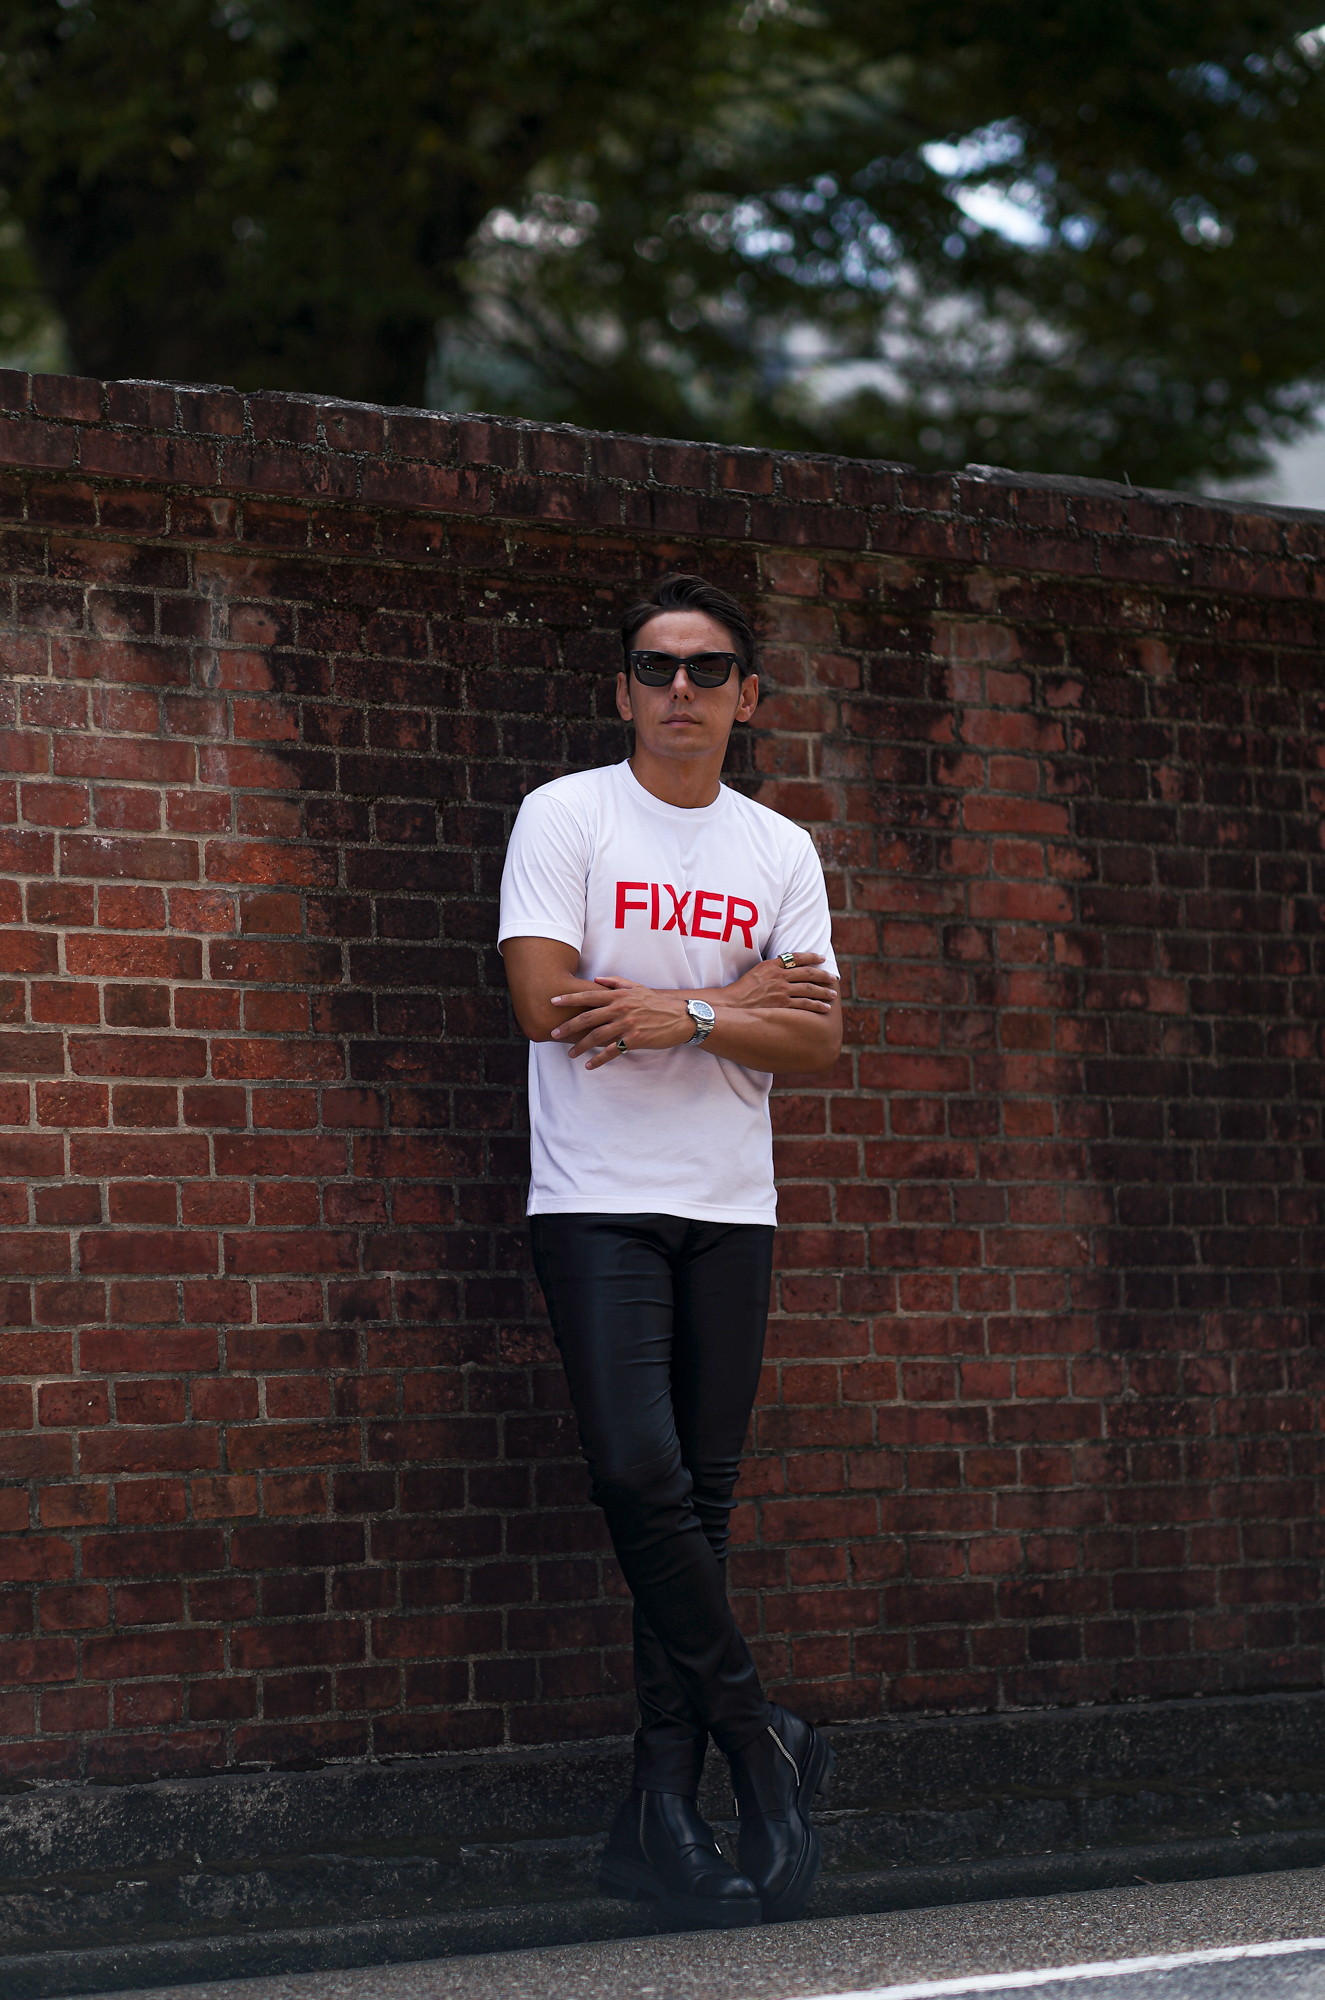 FIXER (フィクサー) FTS-02 FIXER Print Crew Neck T-shirt プリント Tシャツ WHITE × RED (ホワイト×レッド)  【ご予約開始】【2023.9.04(Mon)～2023.9.17(Sun)】 愛知 名古屋 Alto e Diritto altoediritto アルトエデリット